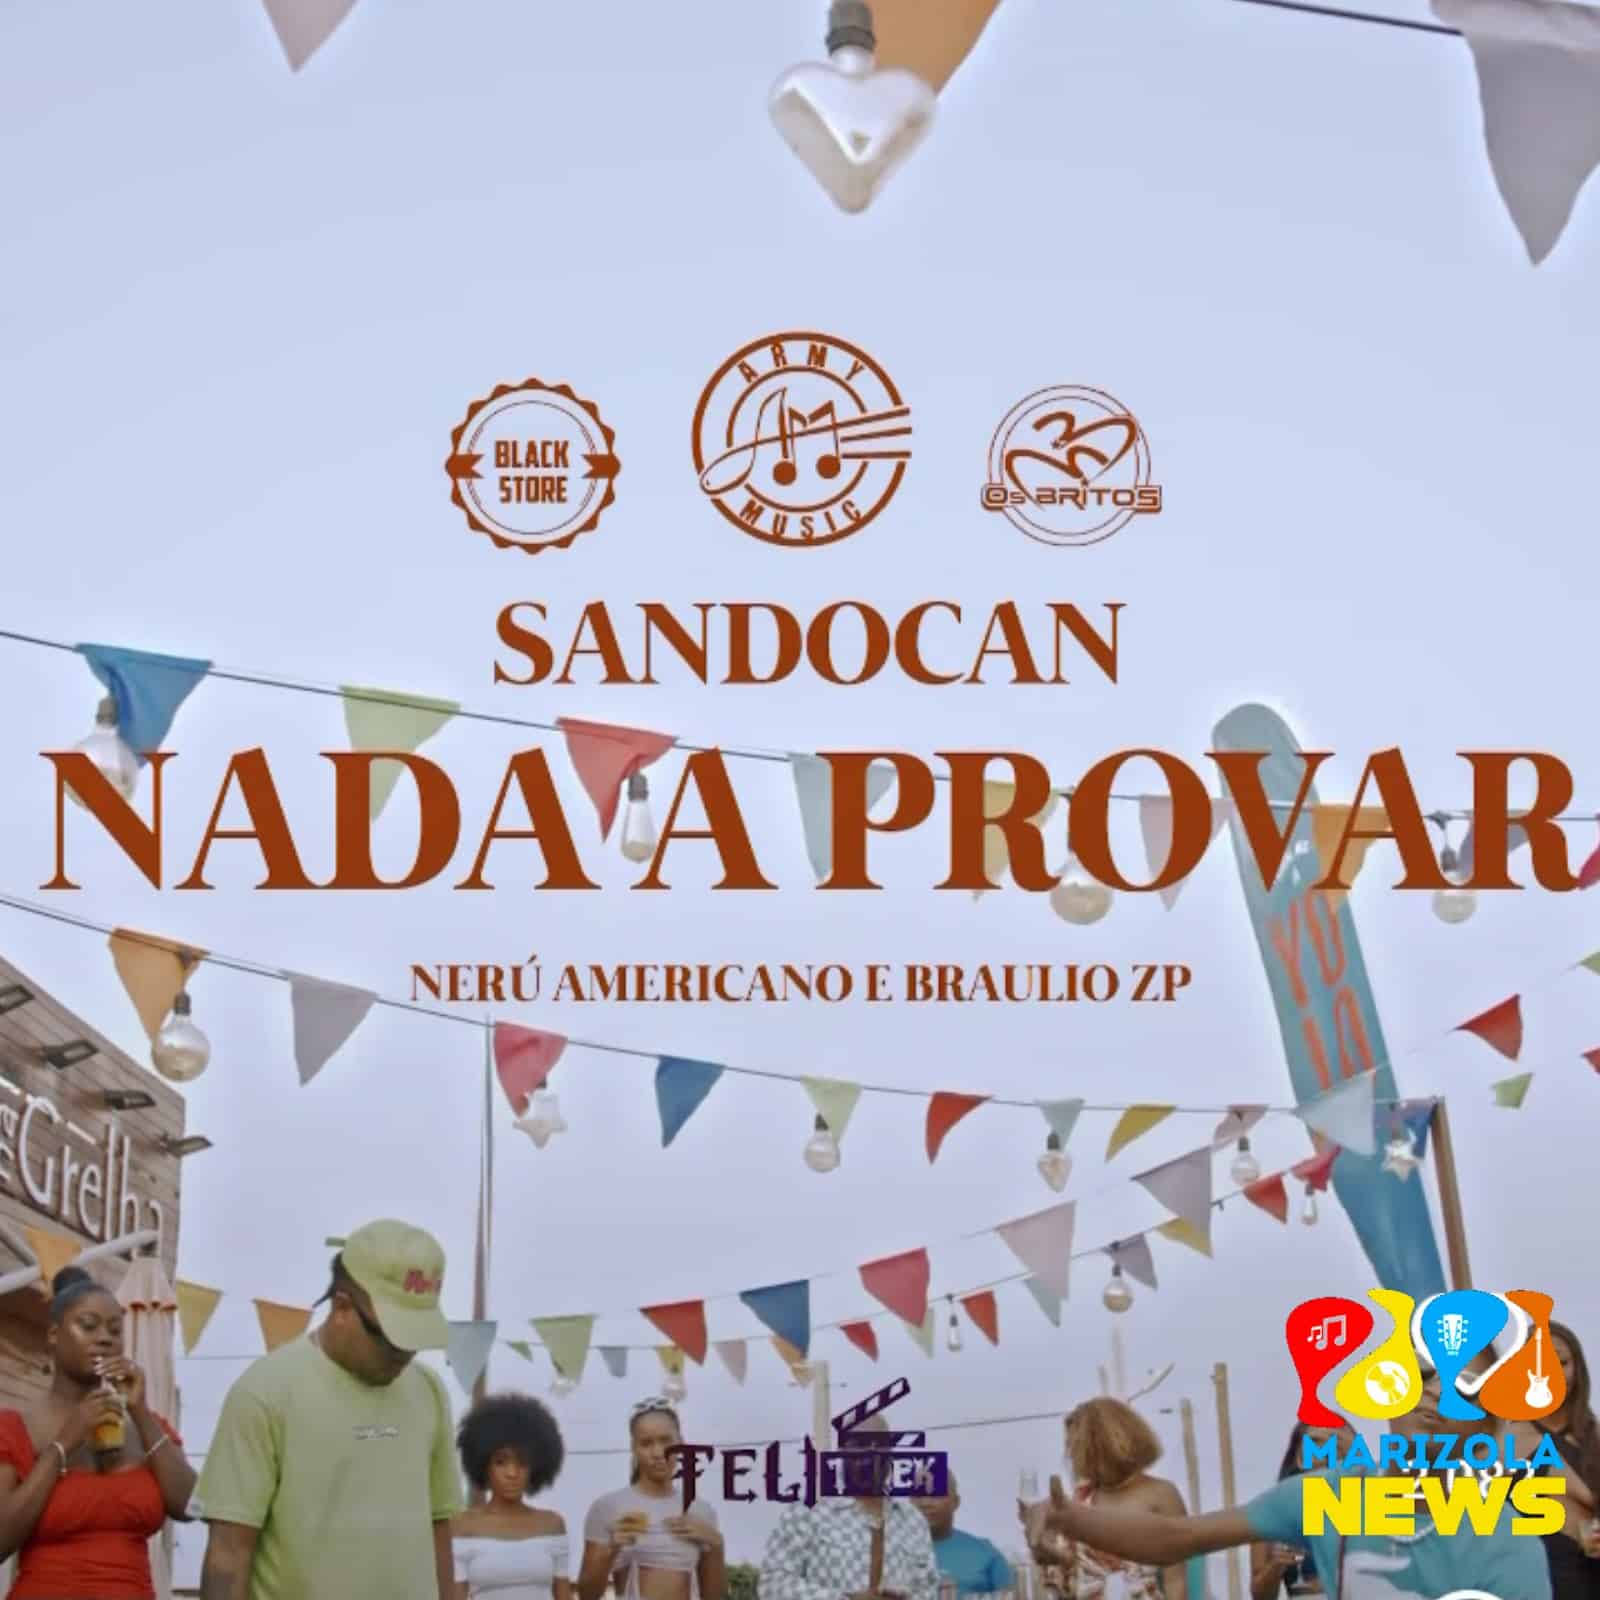 Sandocan – Nada a Provar (feat. Nerú Americano e Bráulio ZP)